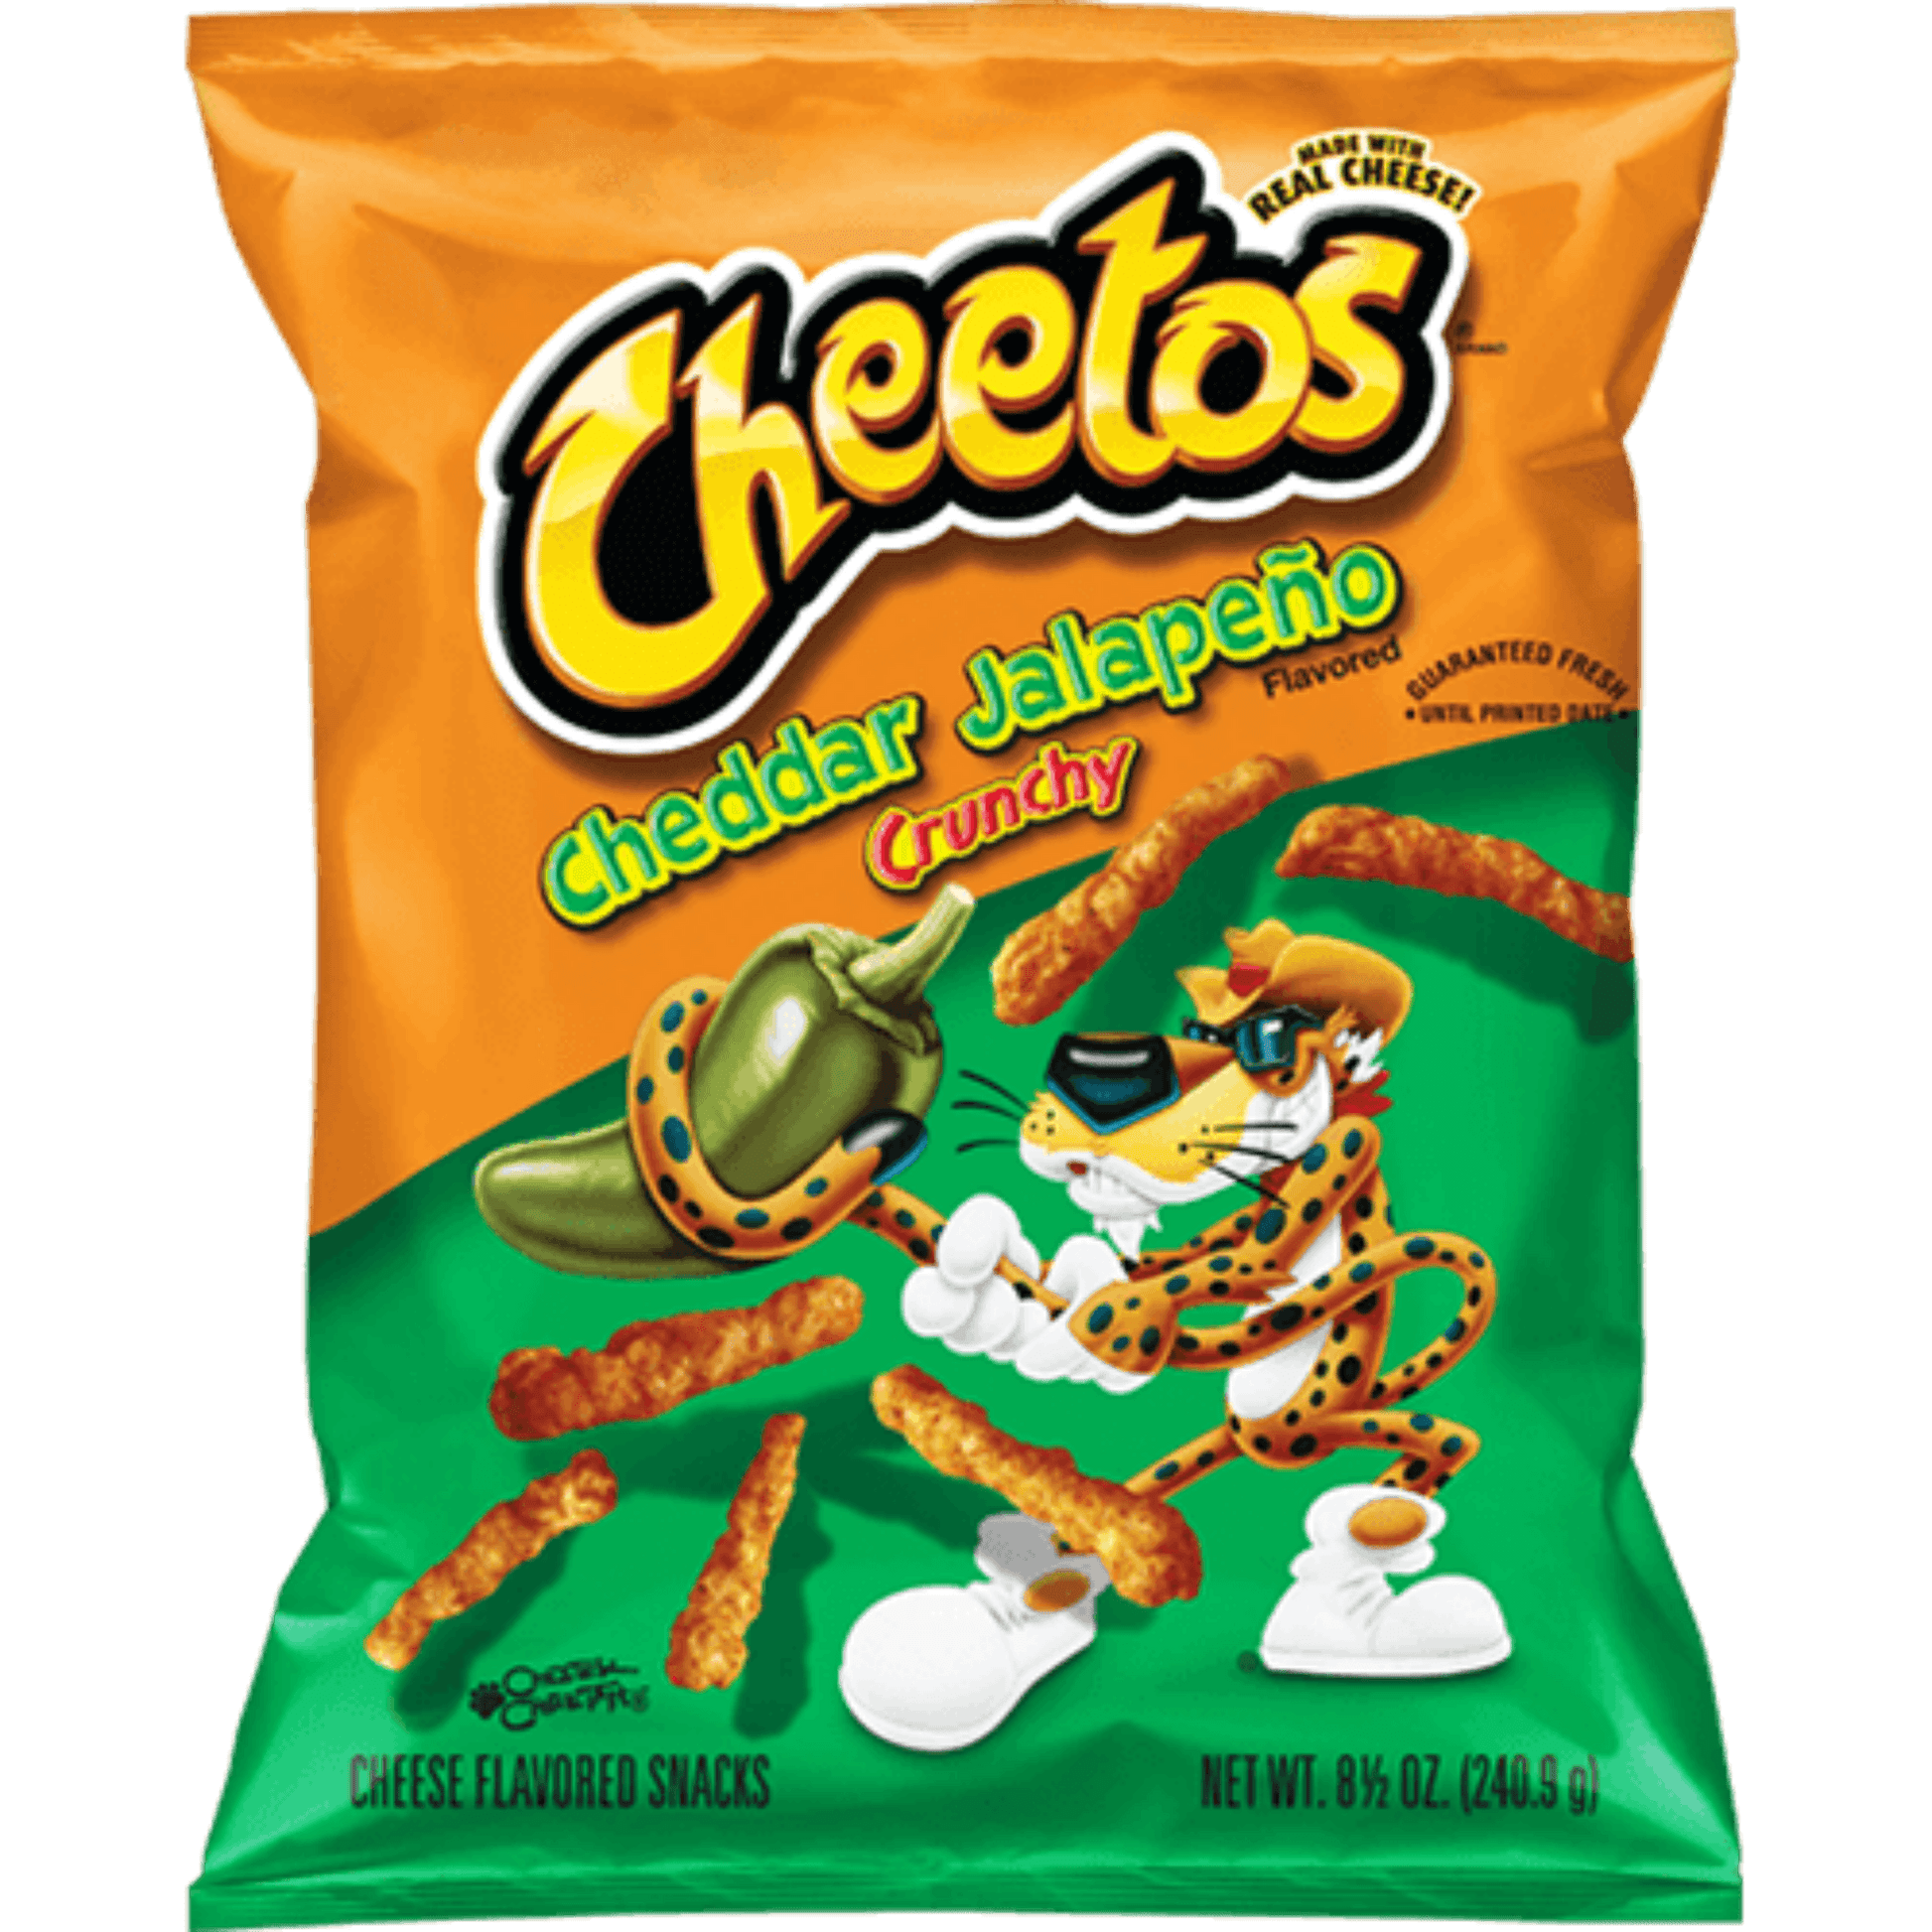 Cheetos Crunchy Cheddar Jalapeno (226g) *COMING SOON* - Cheese Puffs - Scran.ie